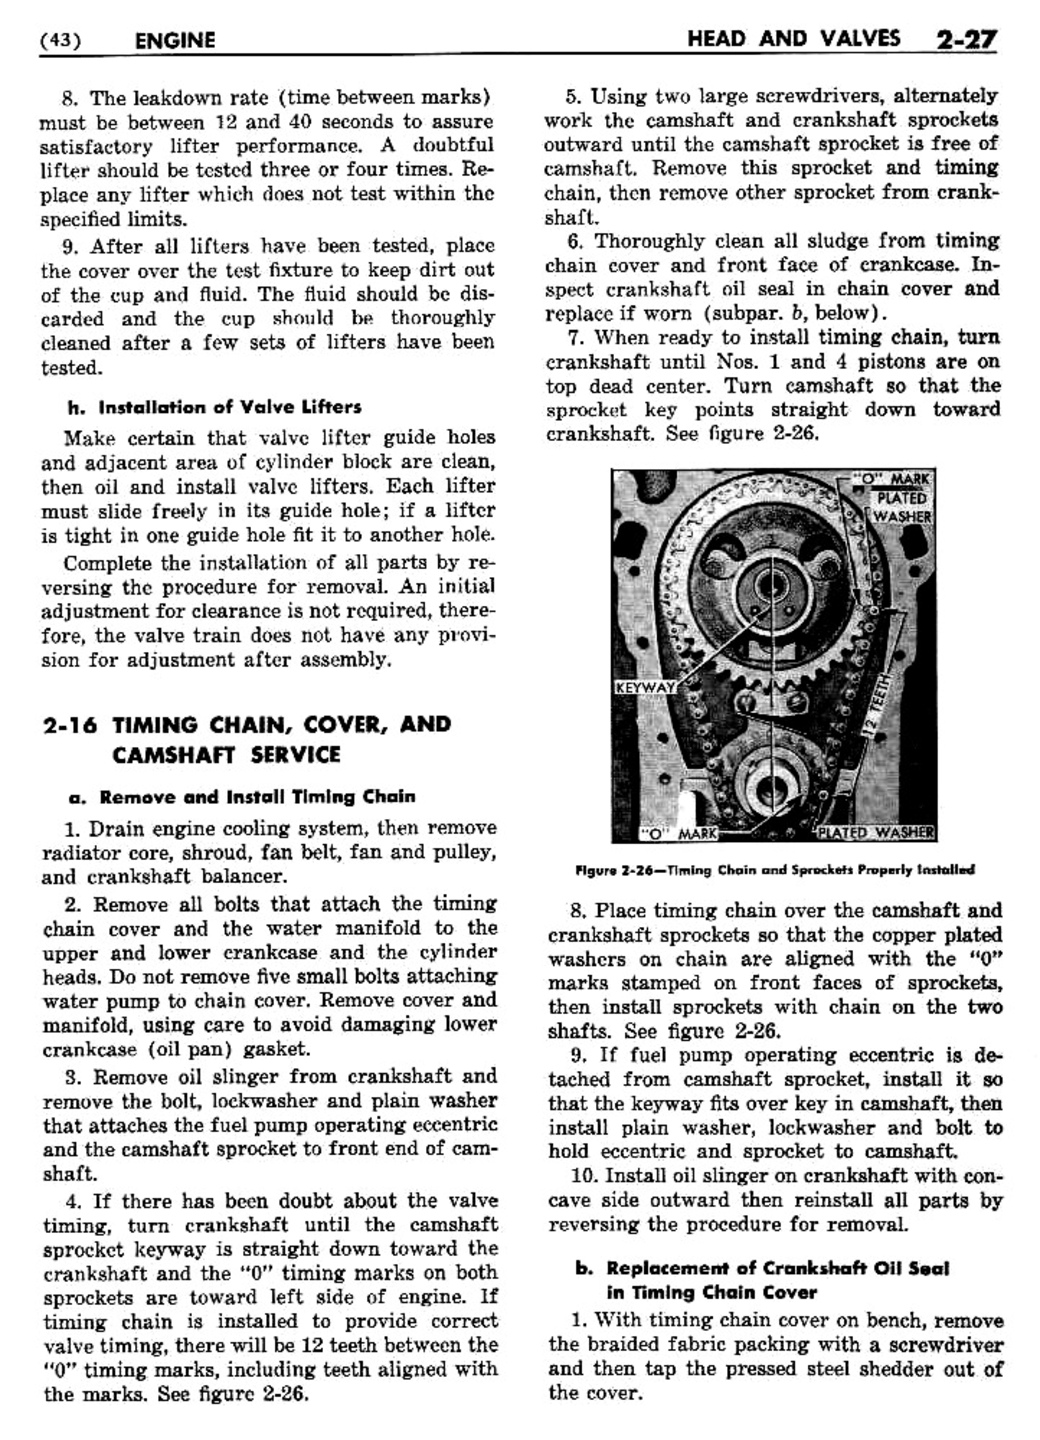 n_03 1955 Buick Shop Manual - Engine-027-027.jpg